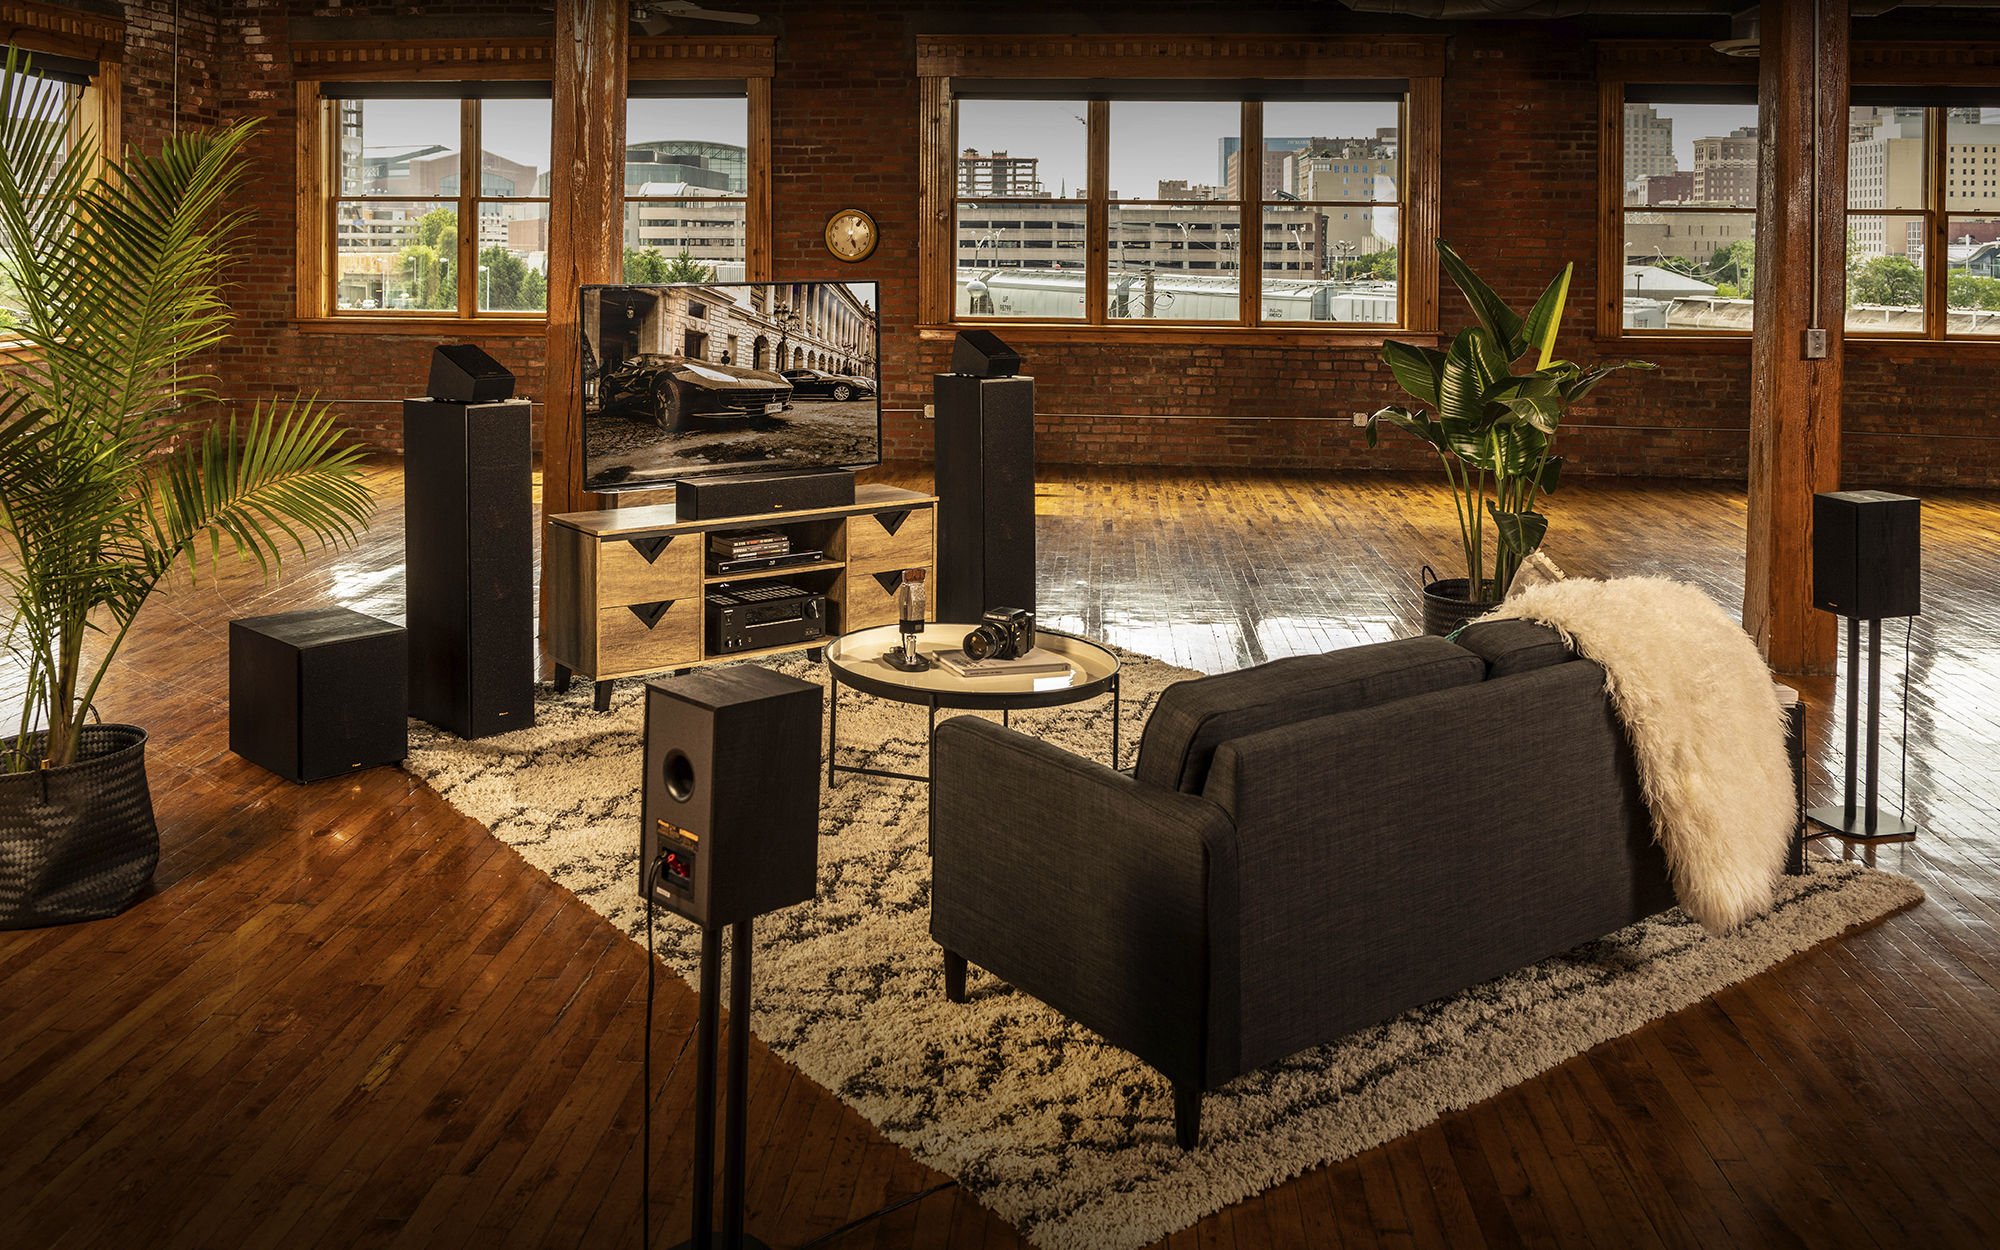 Living room showing off the Klipsch speakers